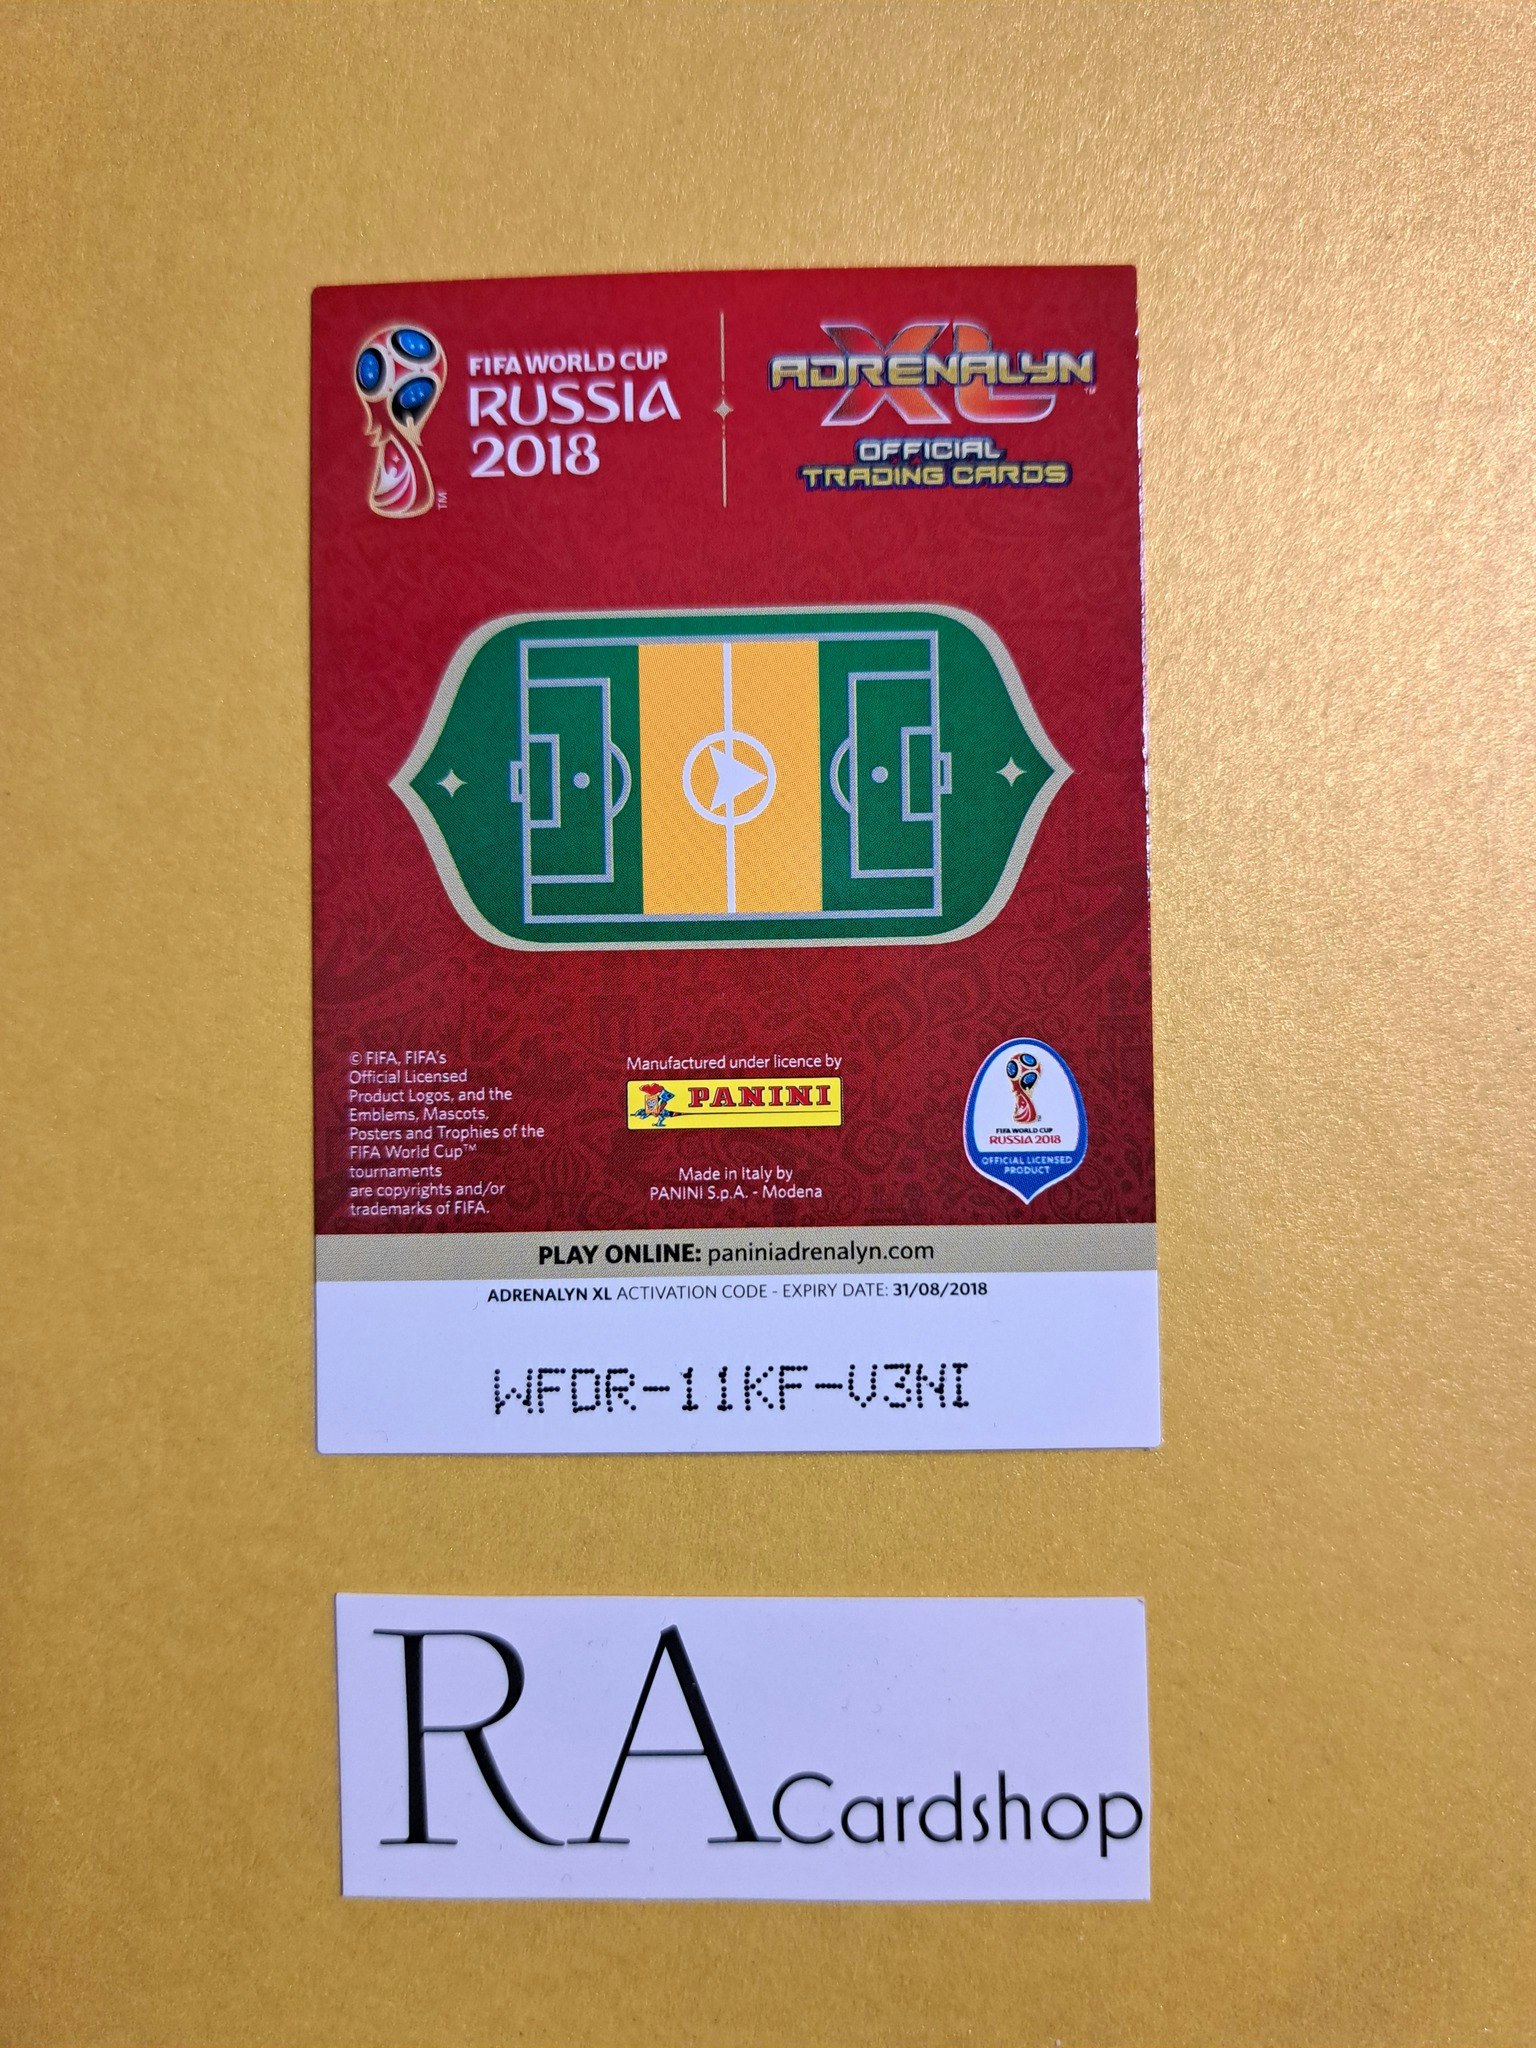 Yuri Zhirkov Fans Favourite #393 Adrenalyn XL FIFA World Cup Russia